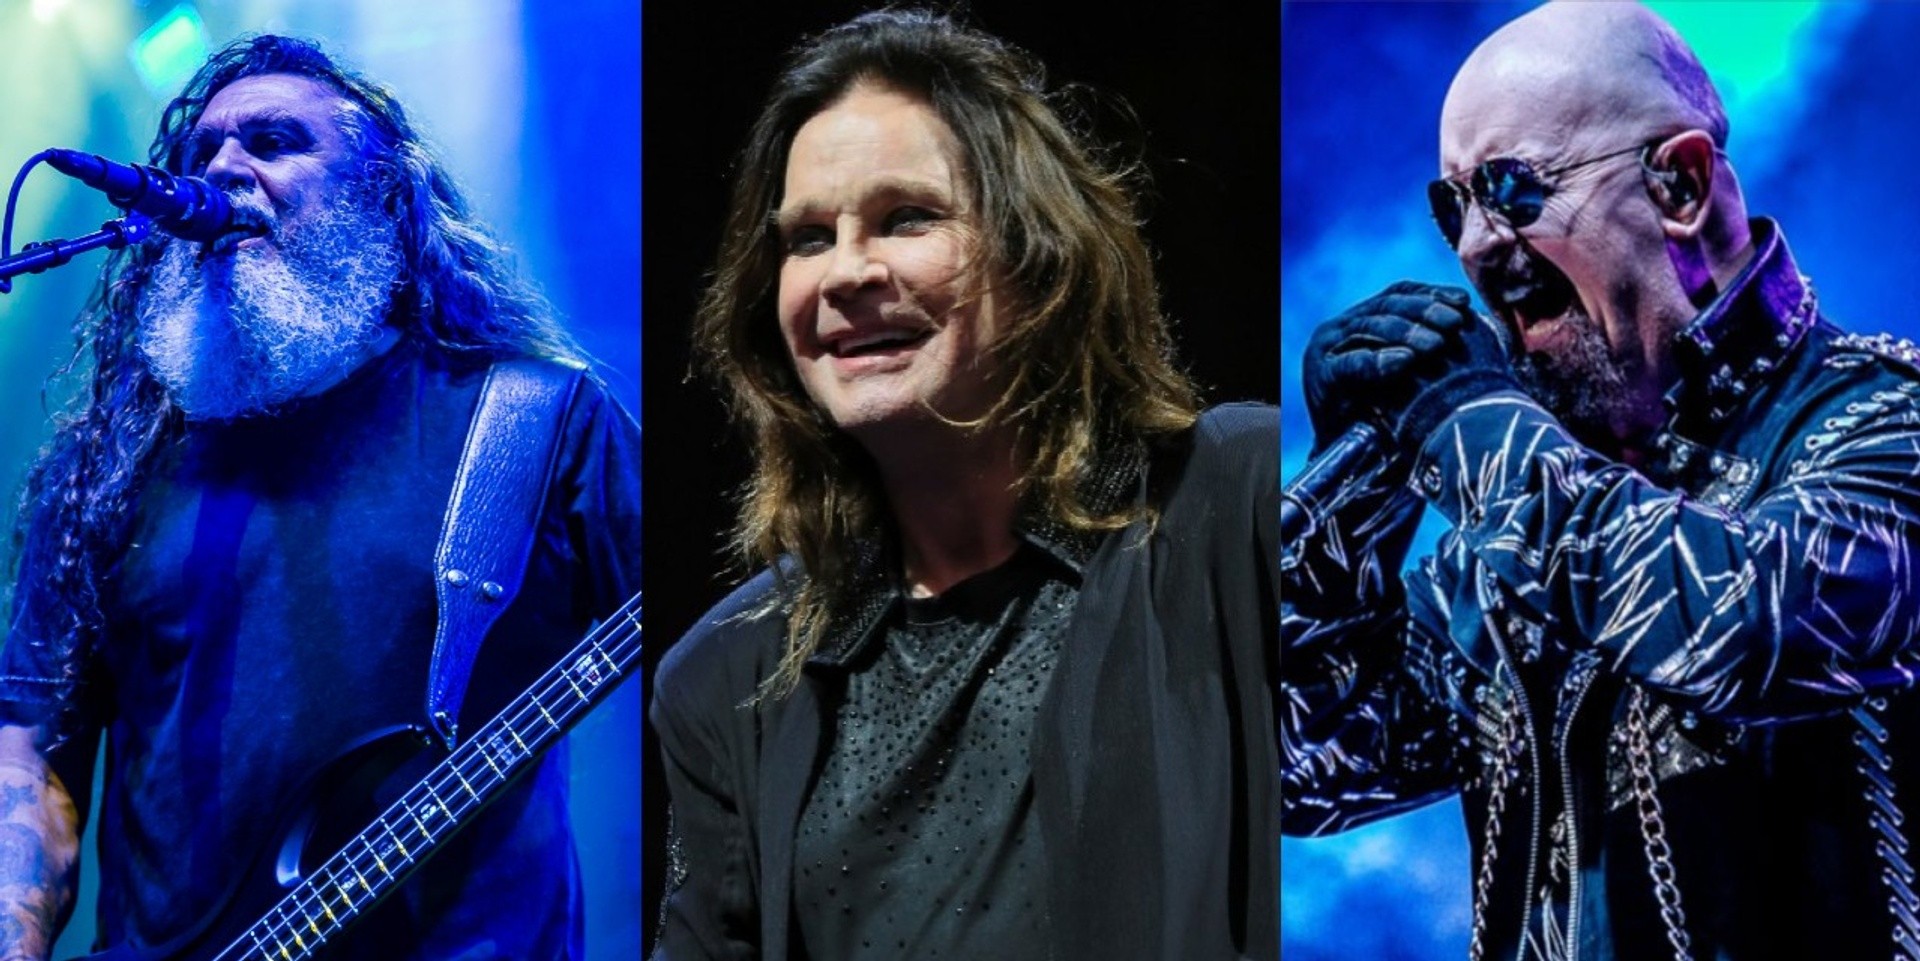 Download Festival Australia boasts huge names for 2019 line-up – Ozzy Osbourne, Slayer, Judas Priest and more